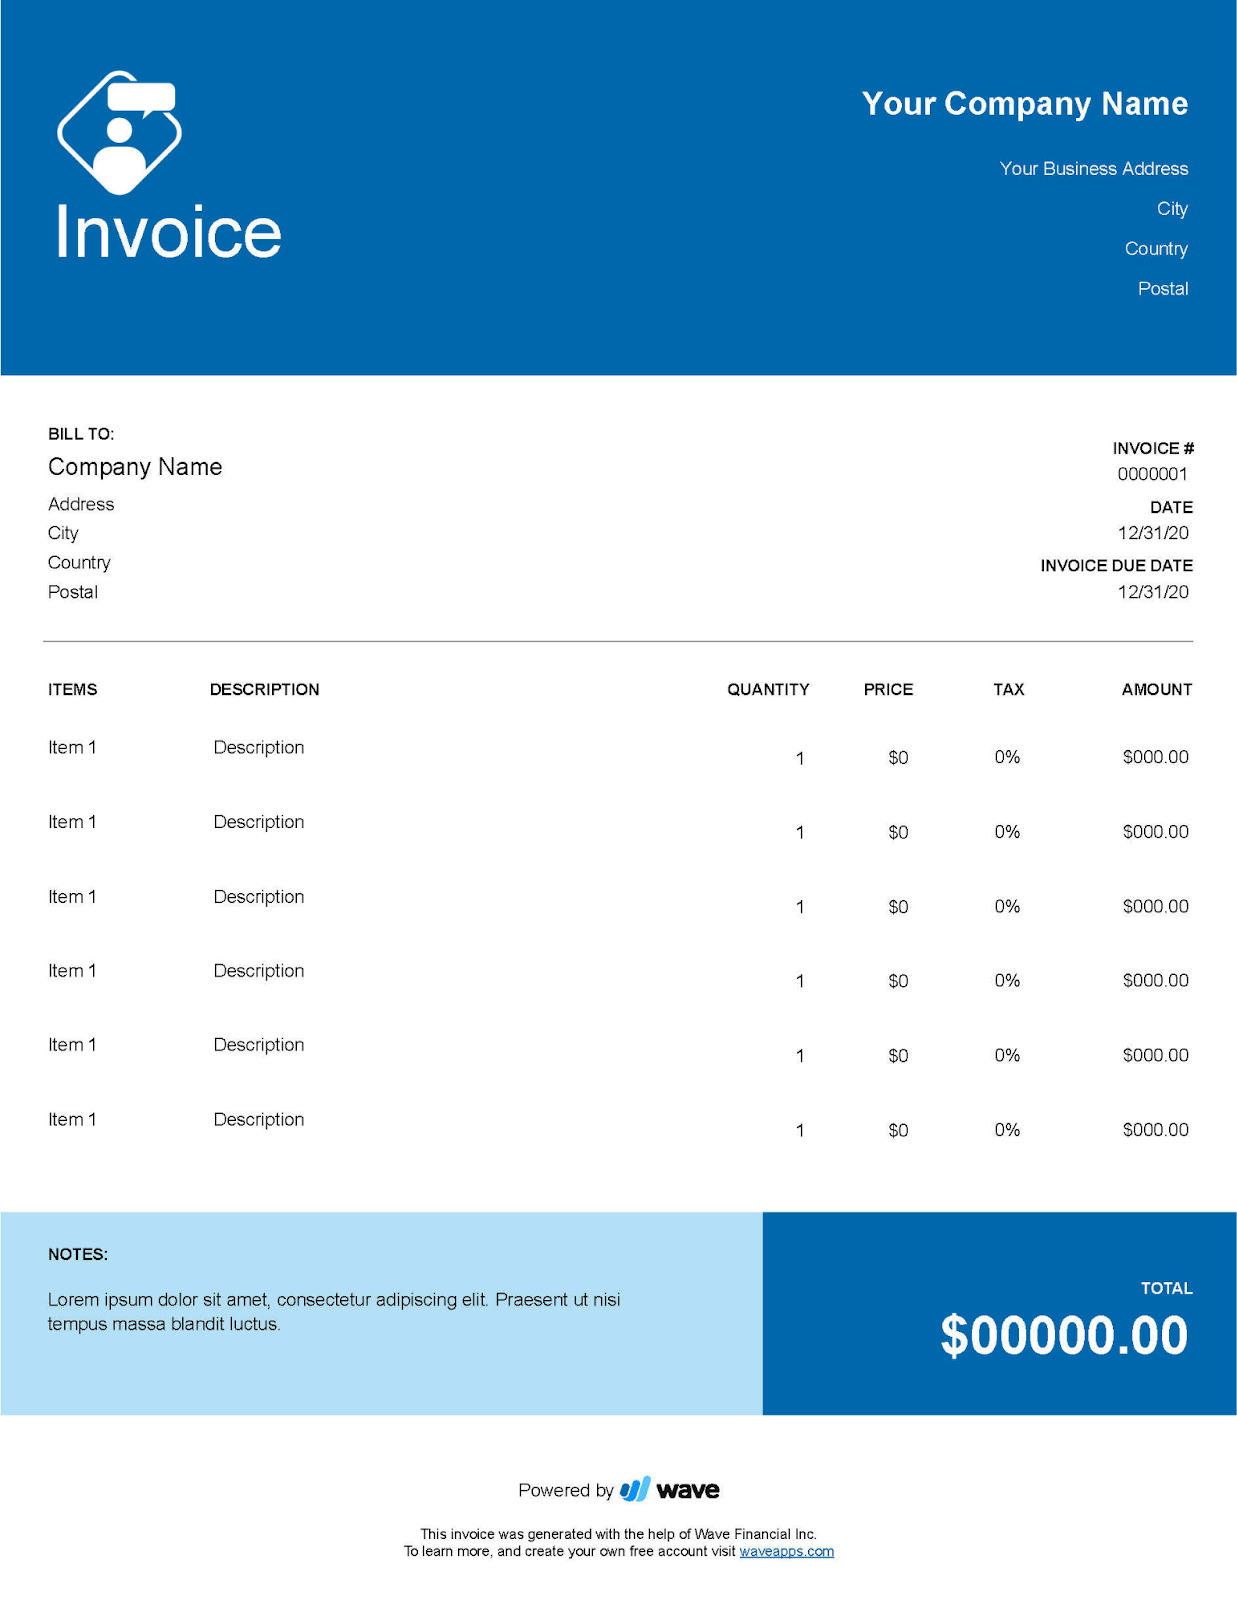 Free Invoicing